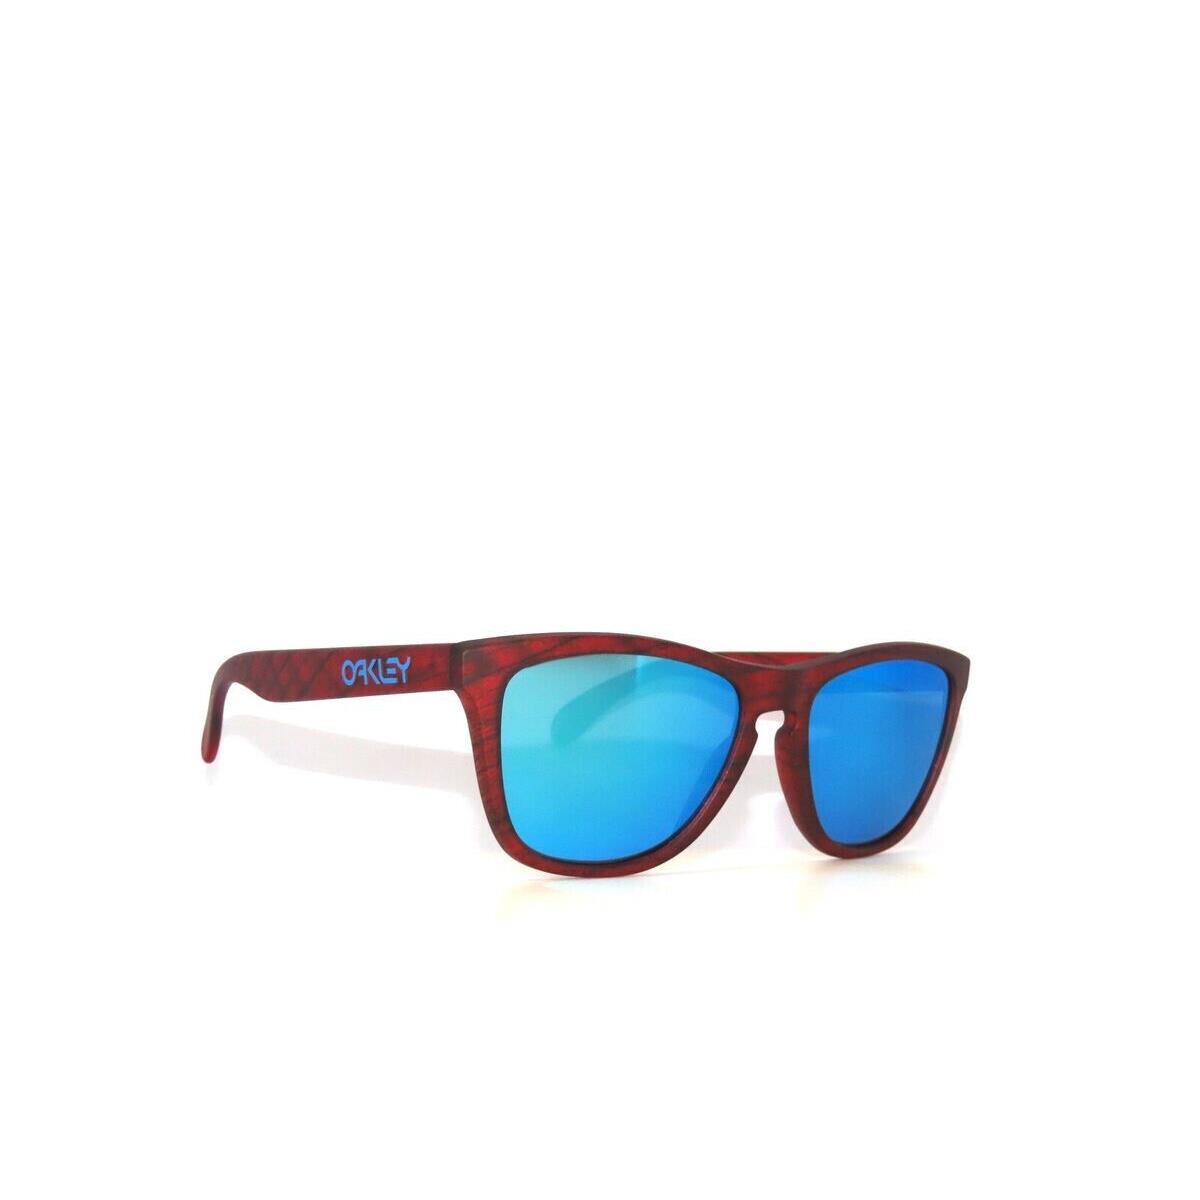 Oakley sunglasses Frogskins - Frame: Matte Red Woodgraine, Lens: Blue 2